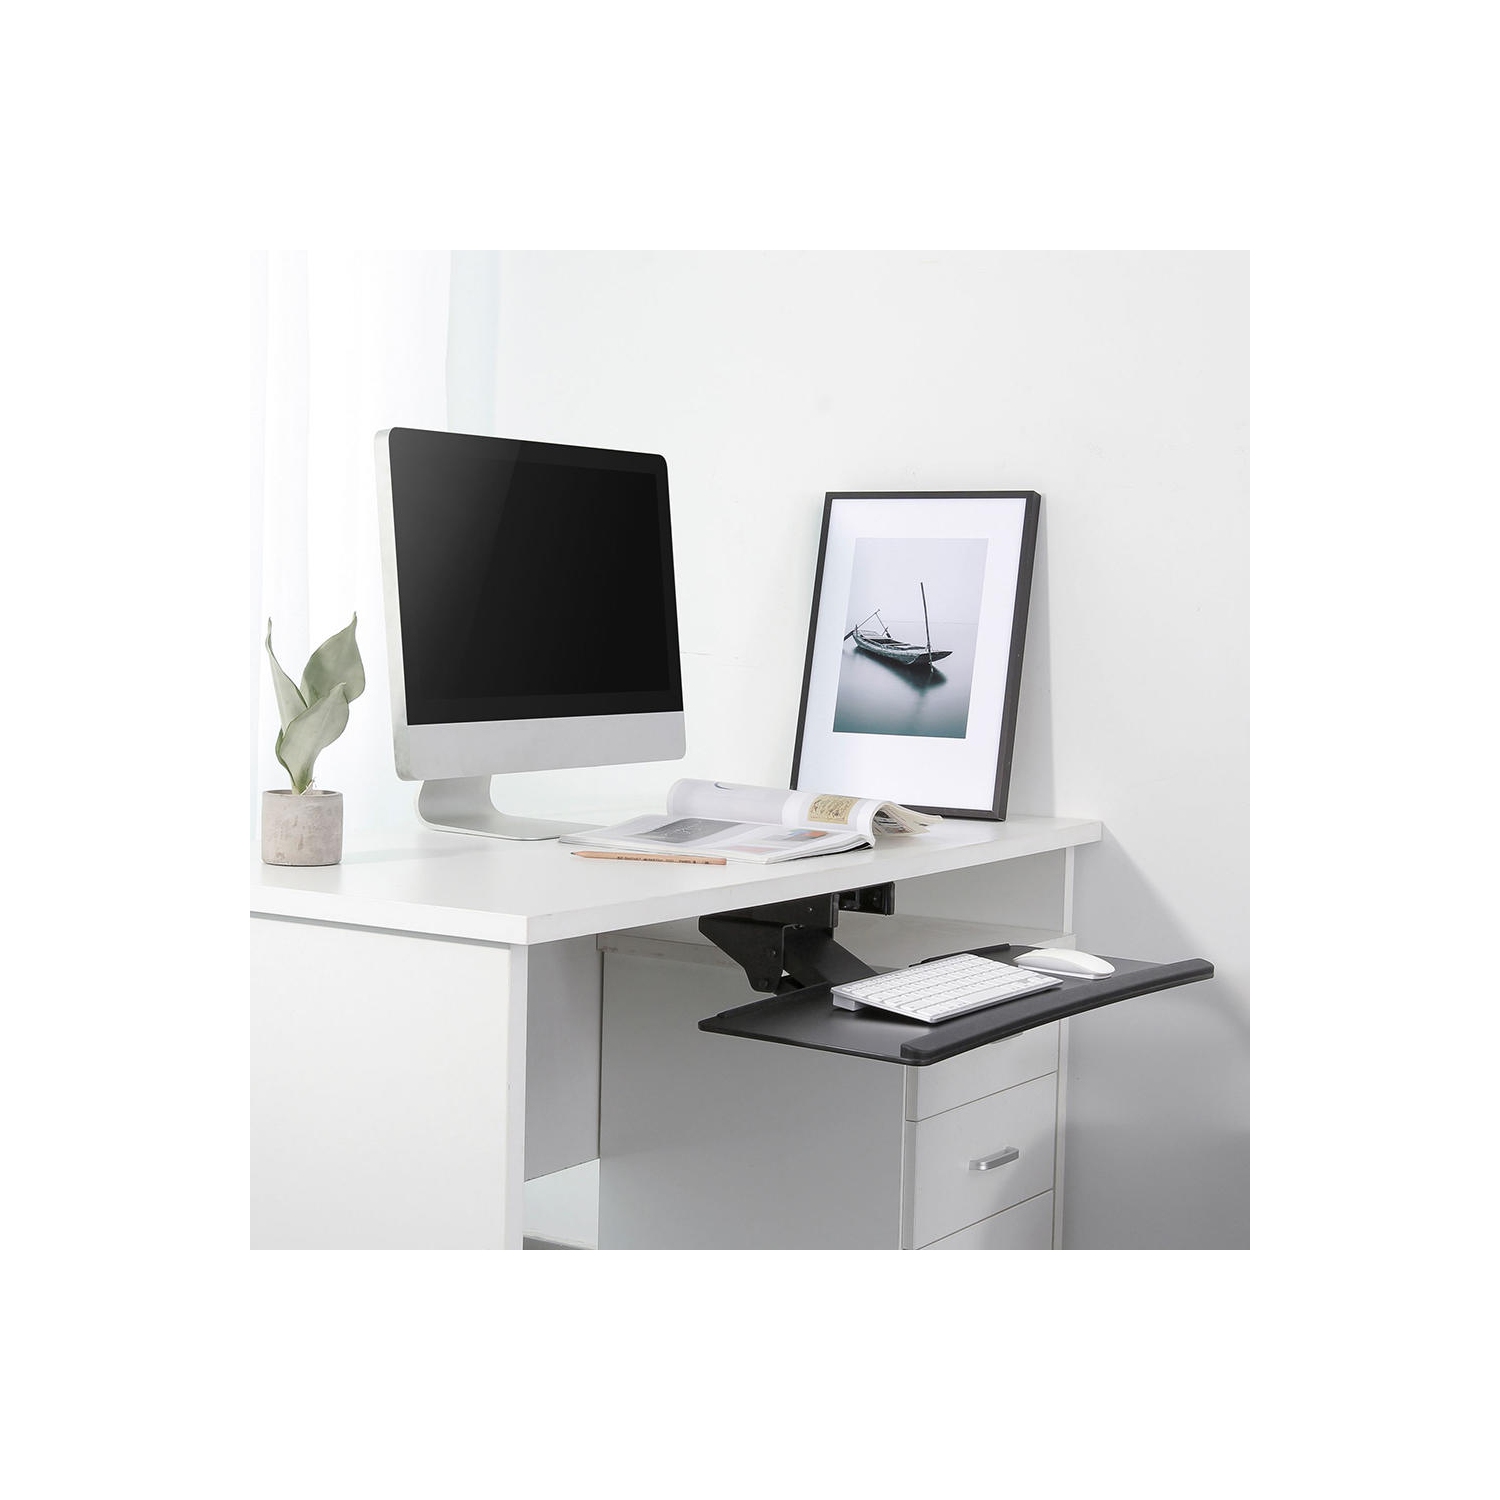 Adjustable Computer Keyboard & Mouse Platform Tray Deluxe Under Table 26.4" Desk Mount - PrimeCables (Black)